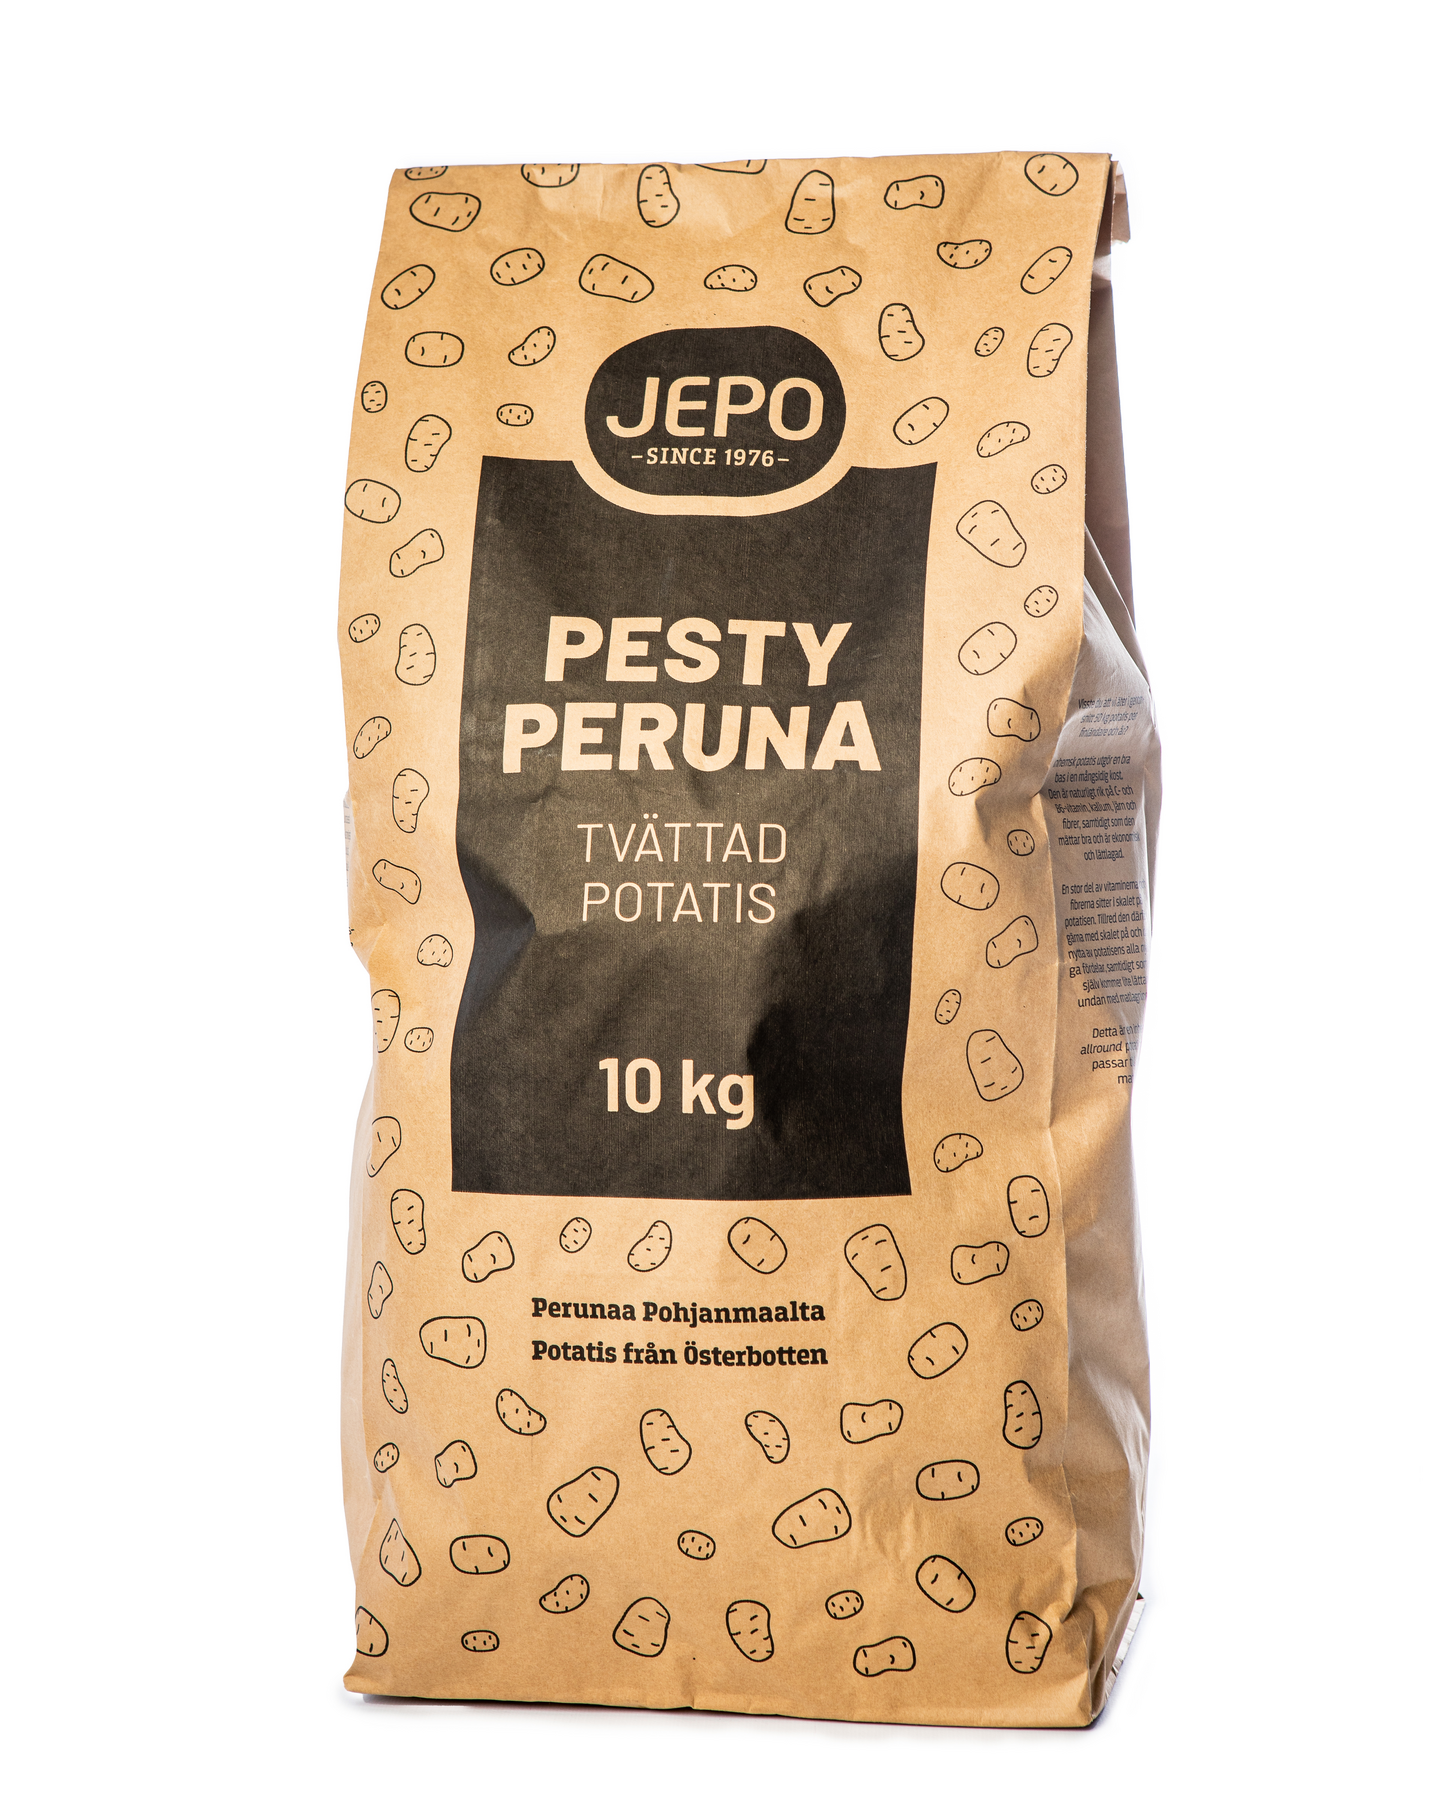 JEPO Peruna pesty 10kg Suomi